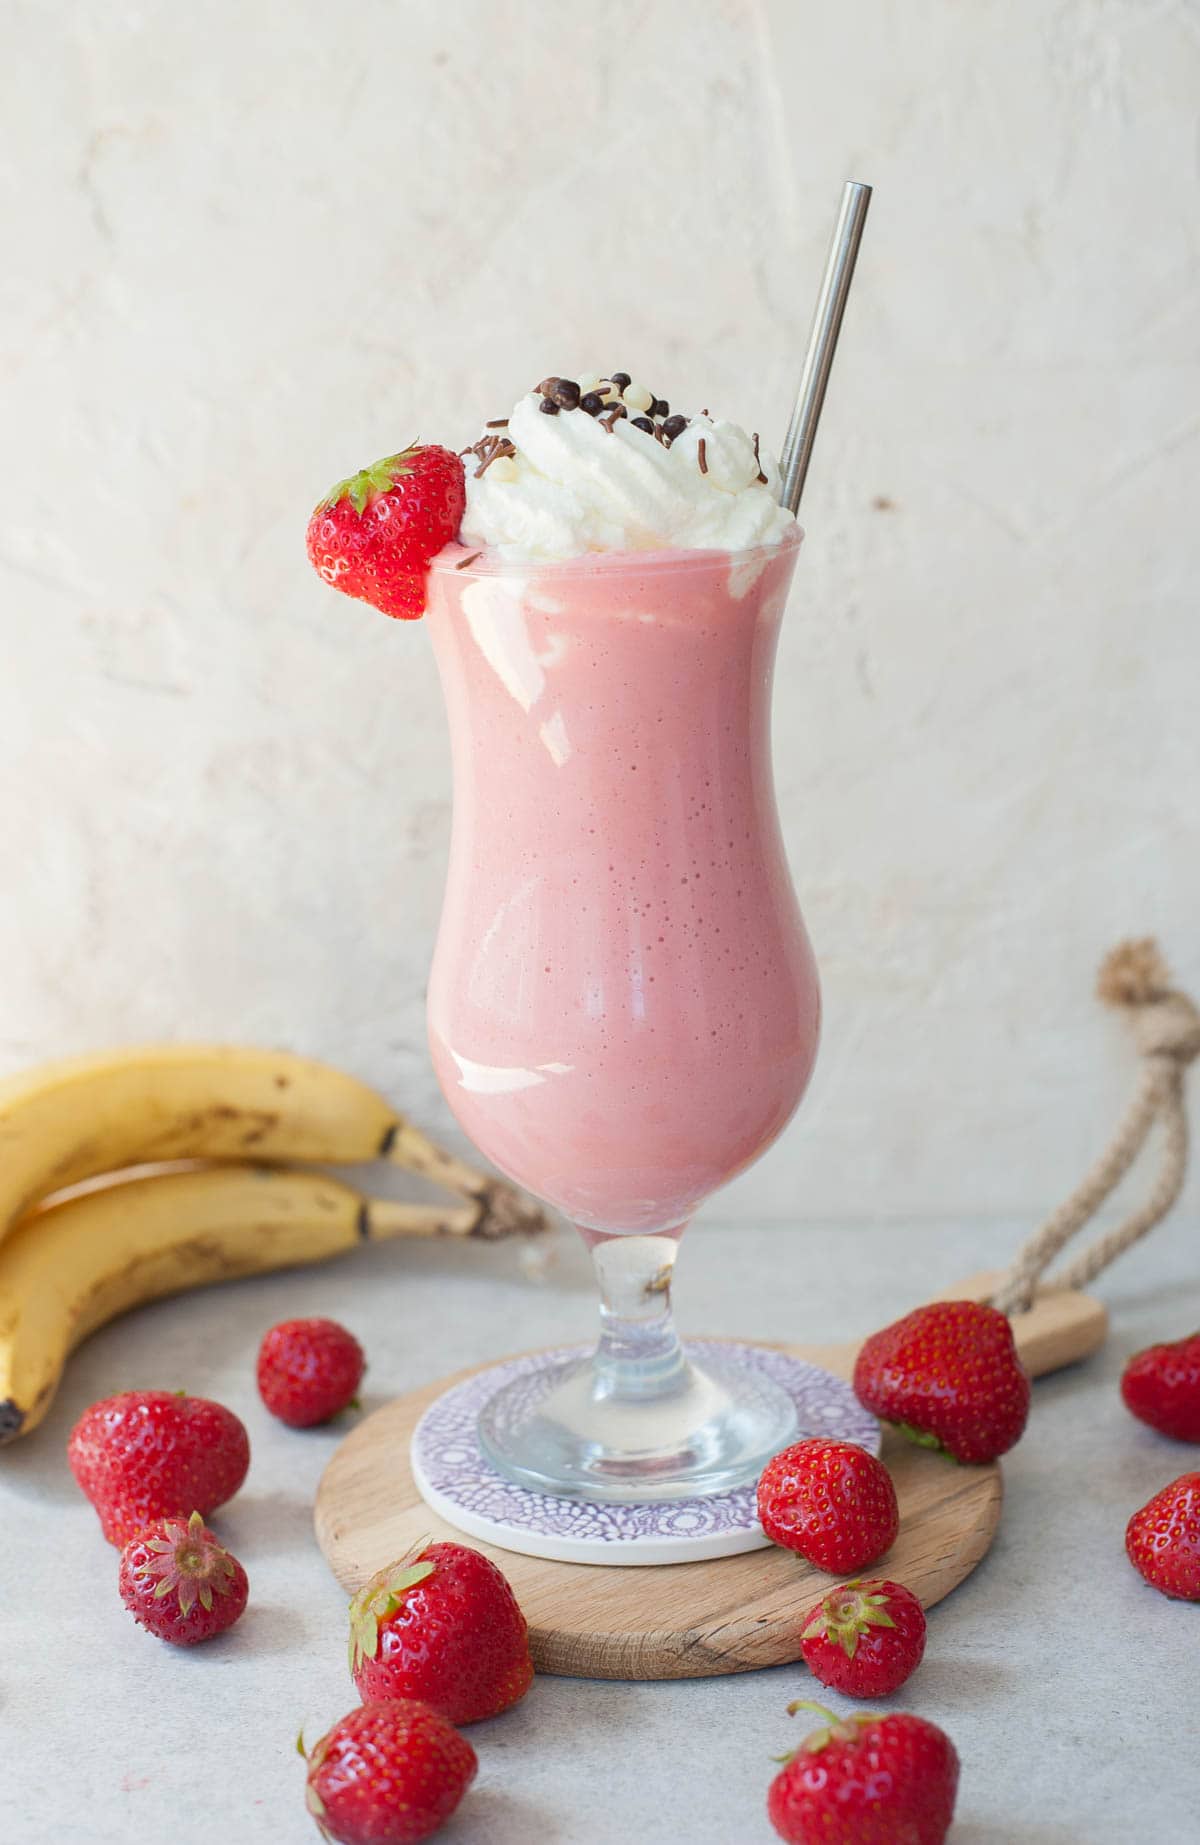 Strawberry banana milkshake - Everyday Delicious